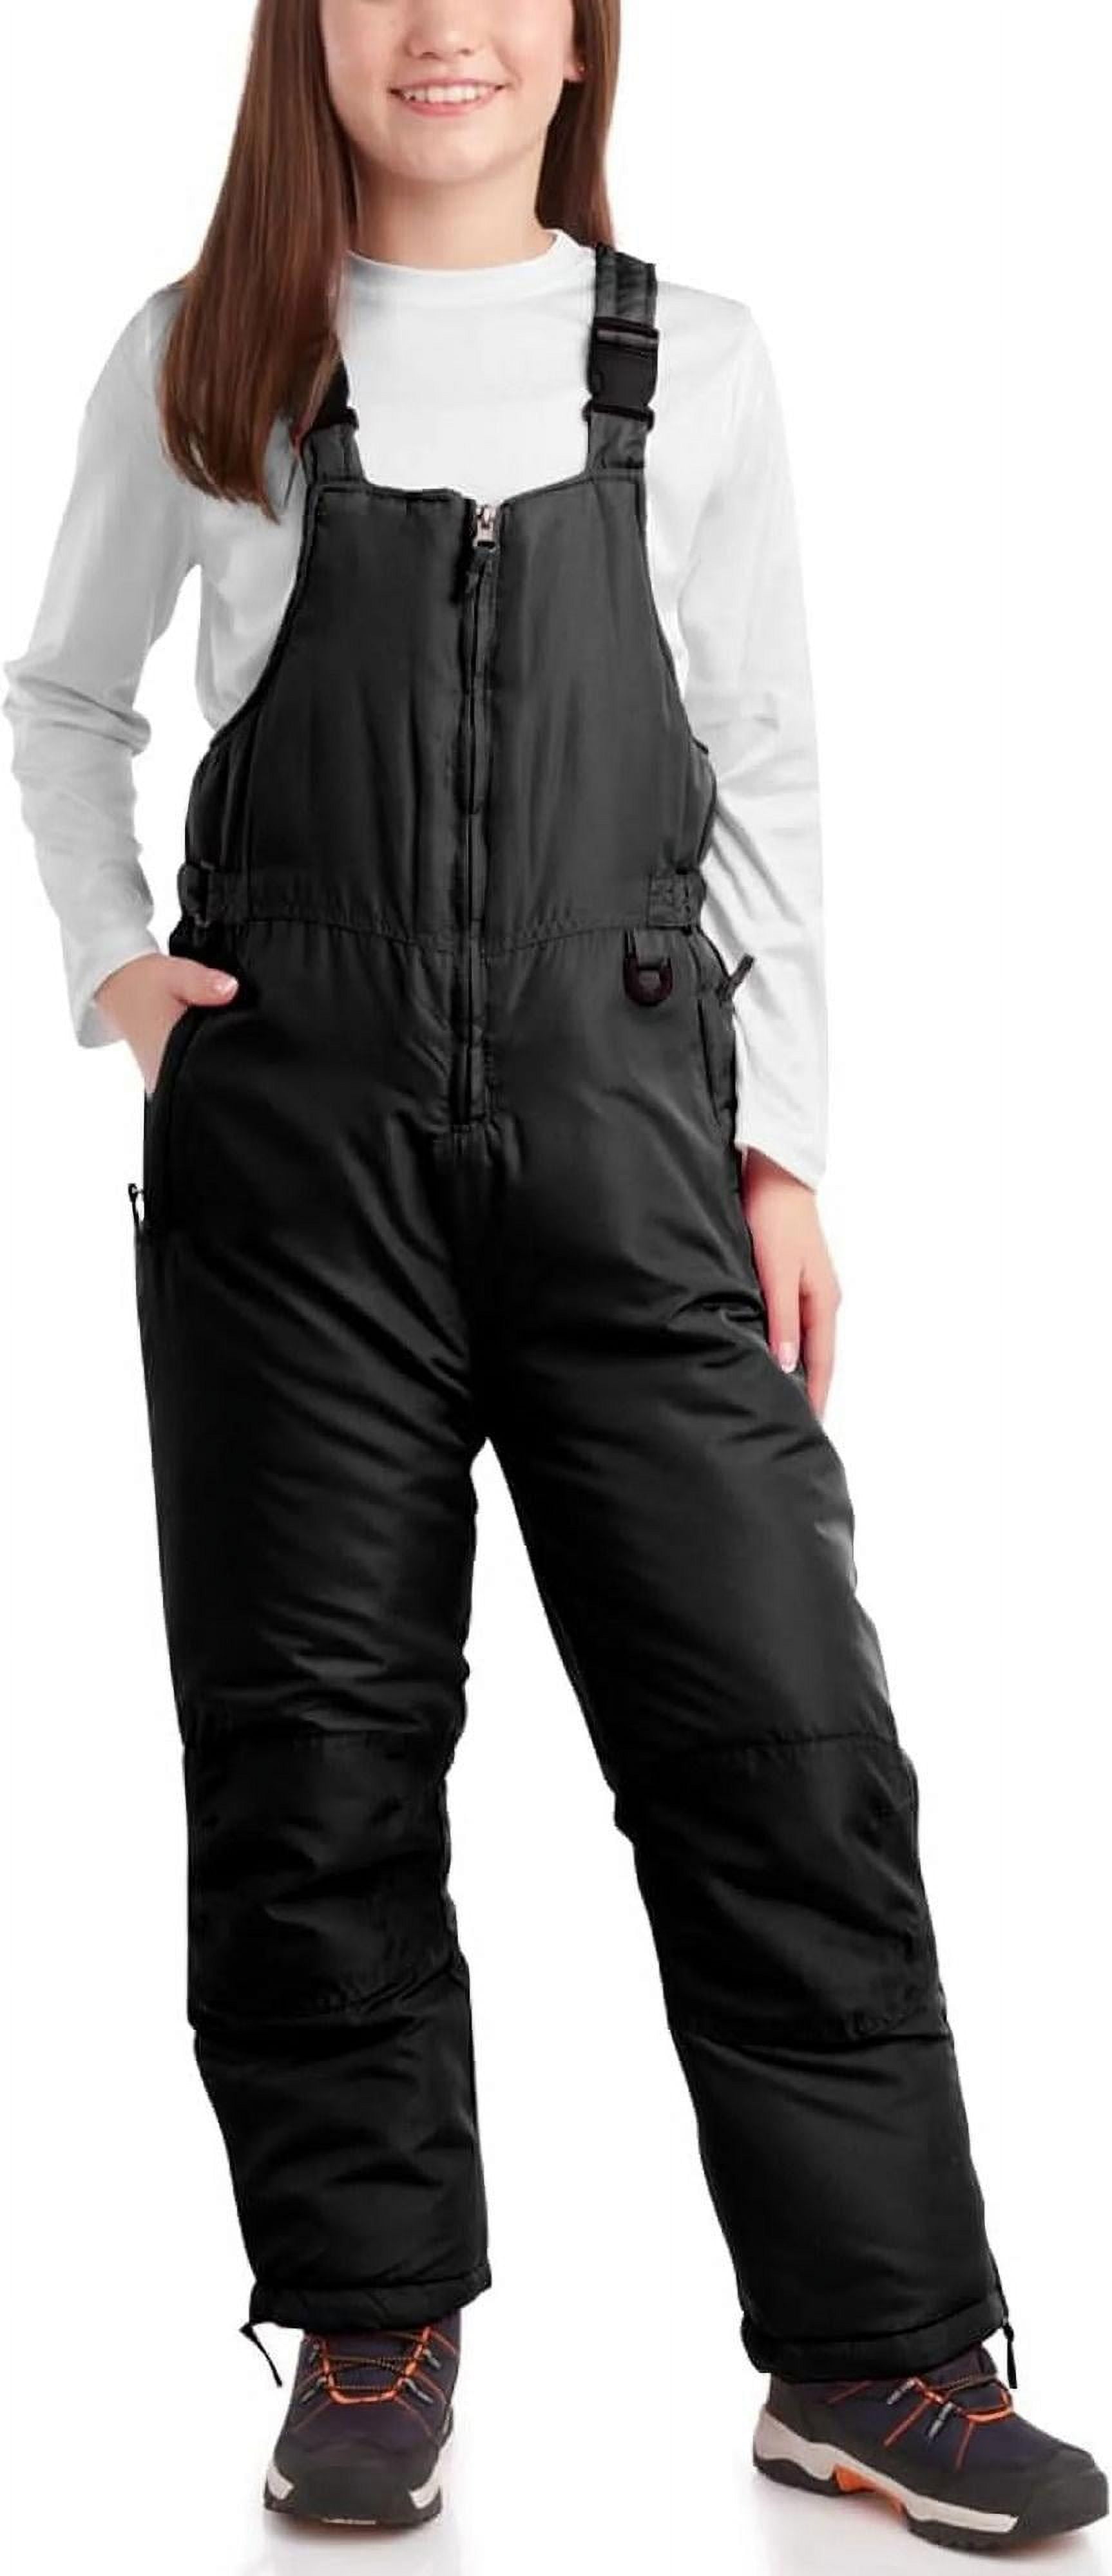 Arctic Hero Kids' Snow Bib - Boys' and Girls' Insulated Waterproof Ski  Pants Overalls (2T-18) 